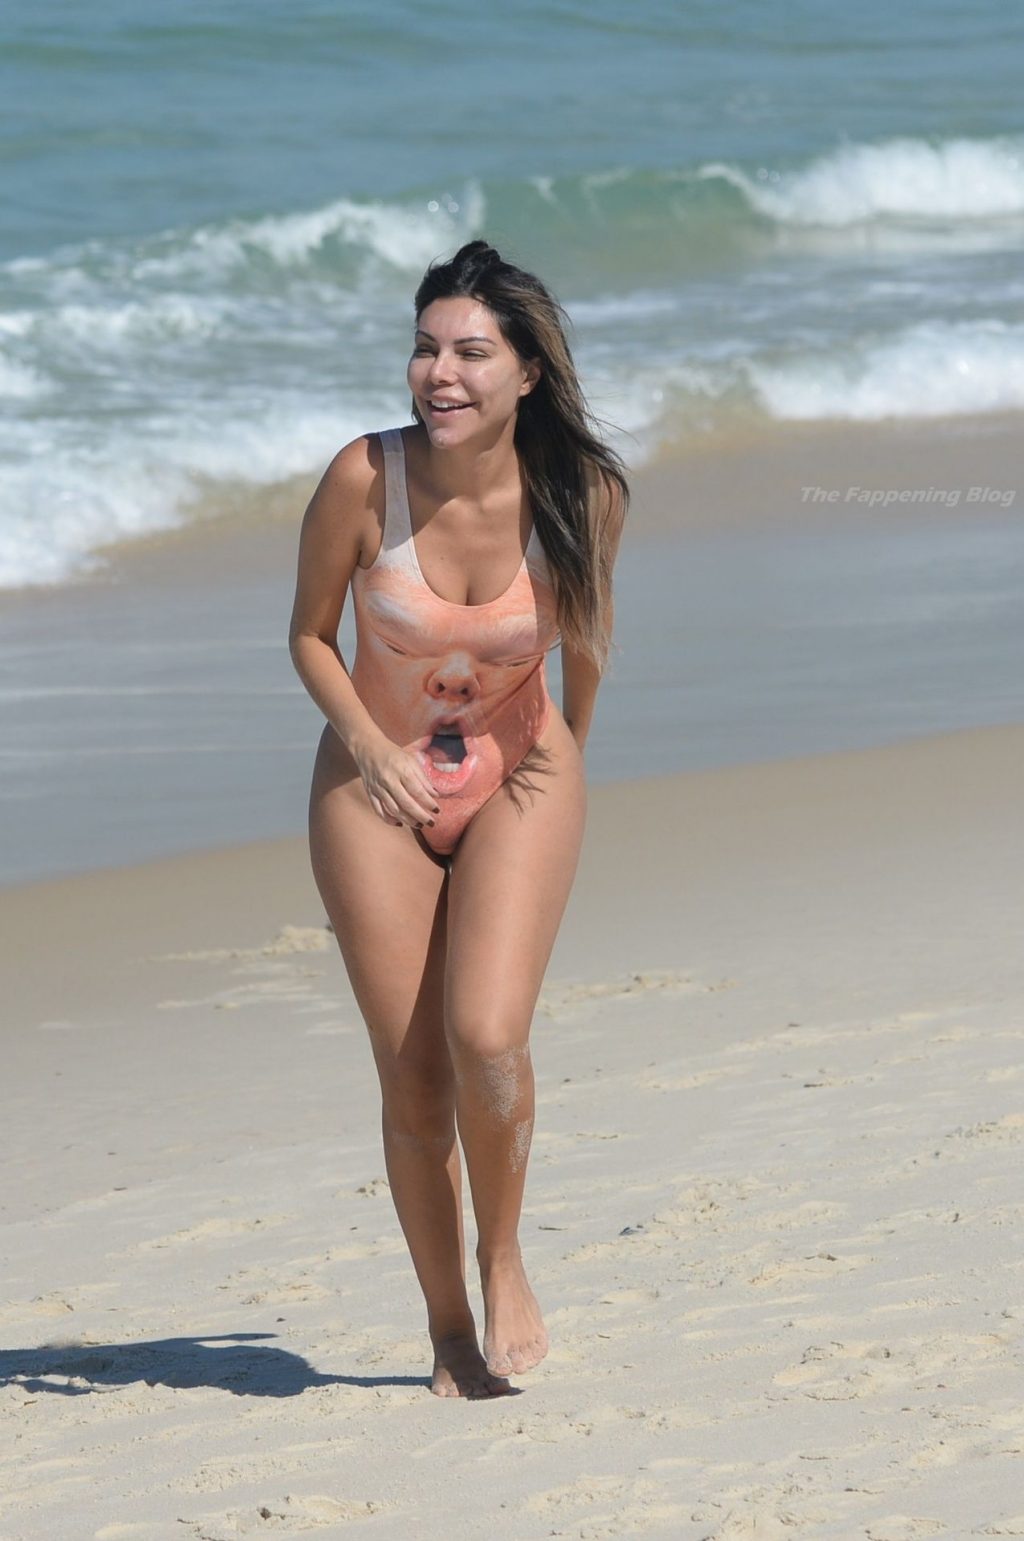 Liziane Gutierrez Stuns on the Beach in Brazil (35 Photos)